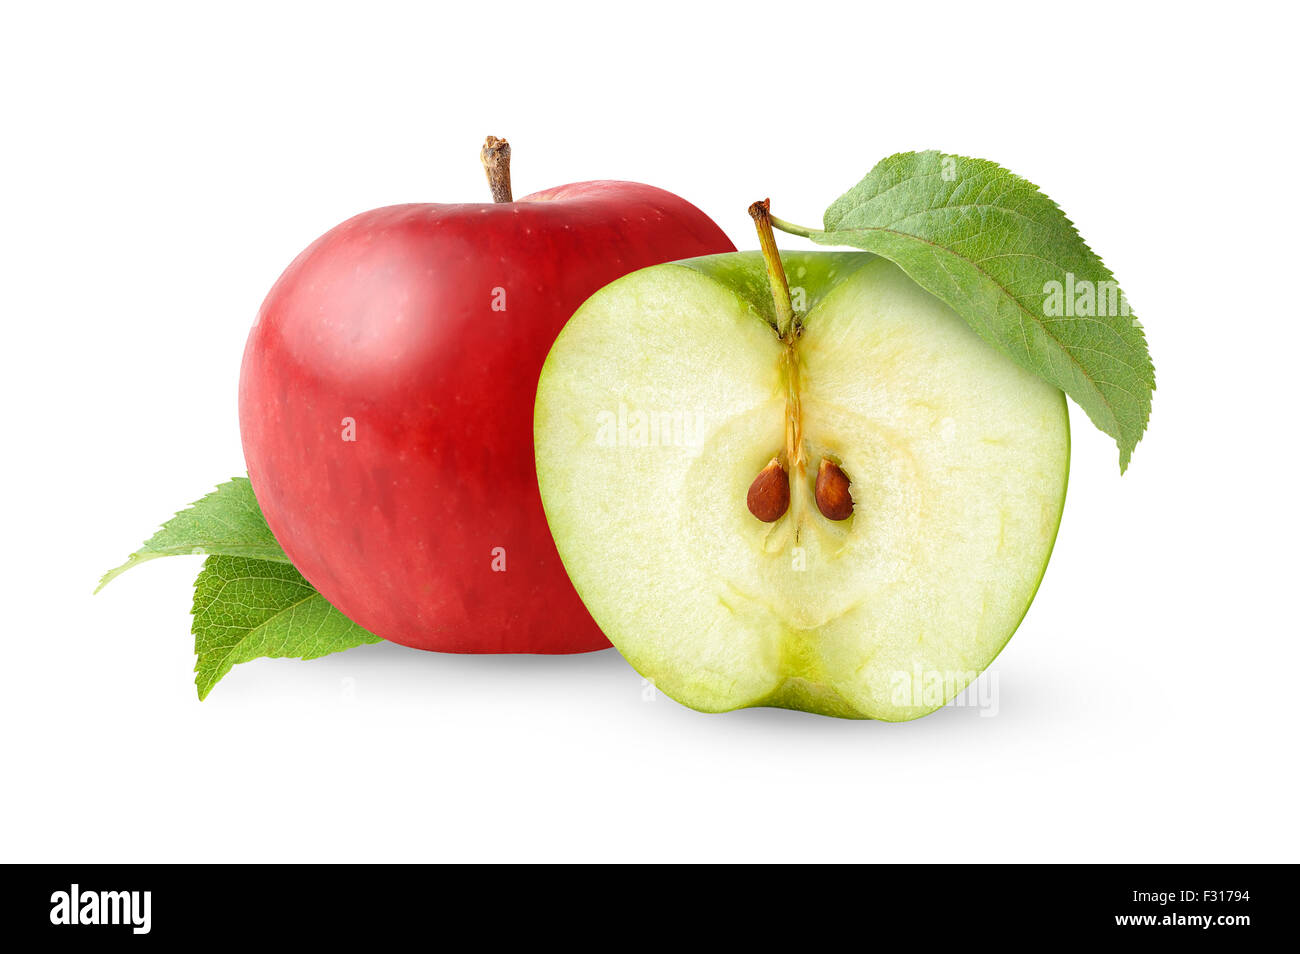 The apple am little. Яблоко в разрезе. Разрезанное яблоко. Срез яблока. Две половинки яблока.